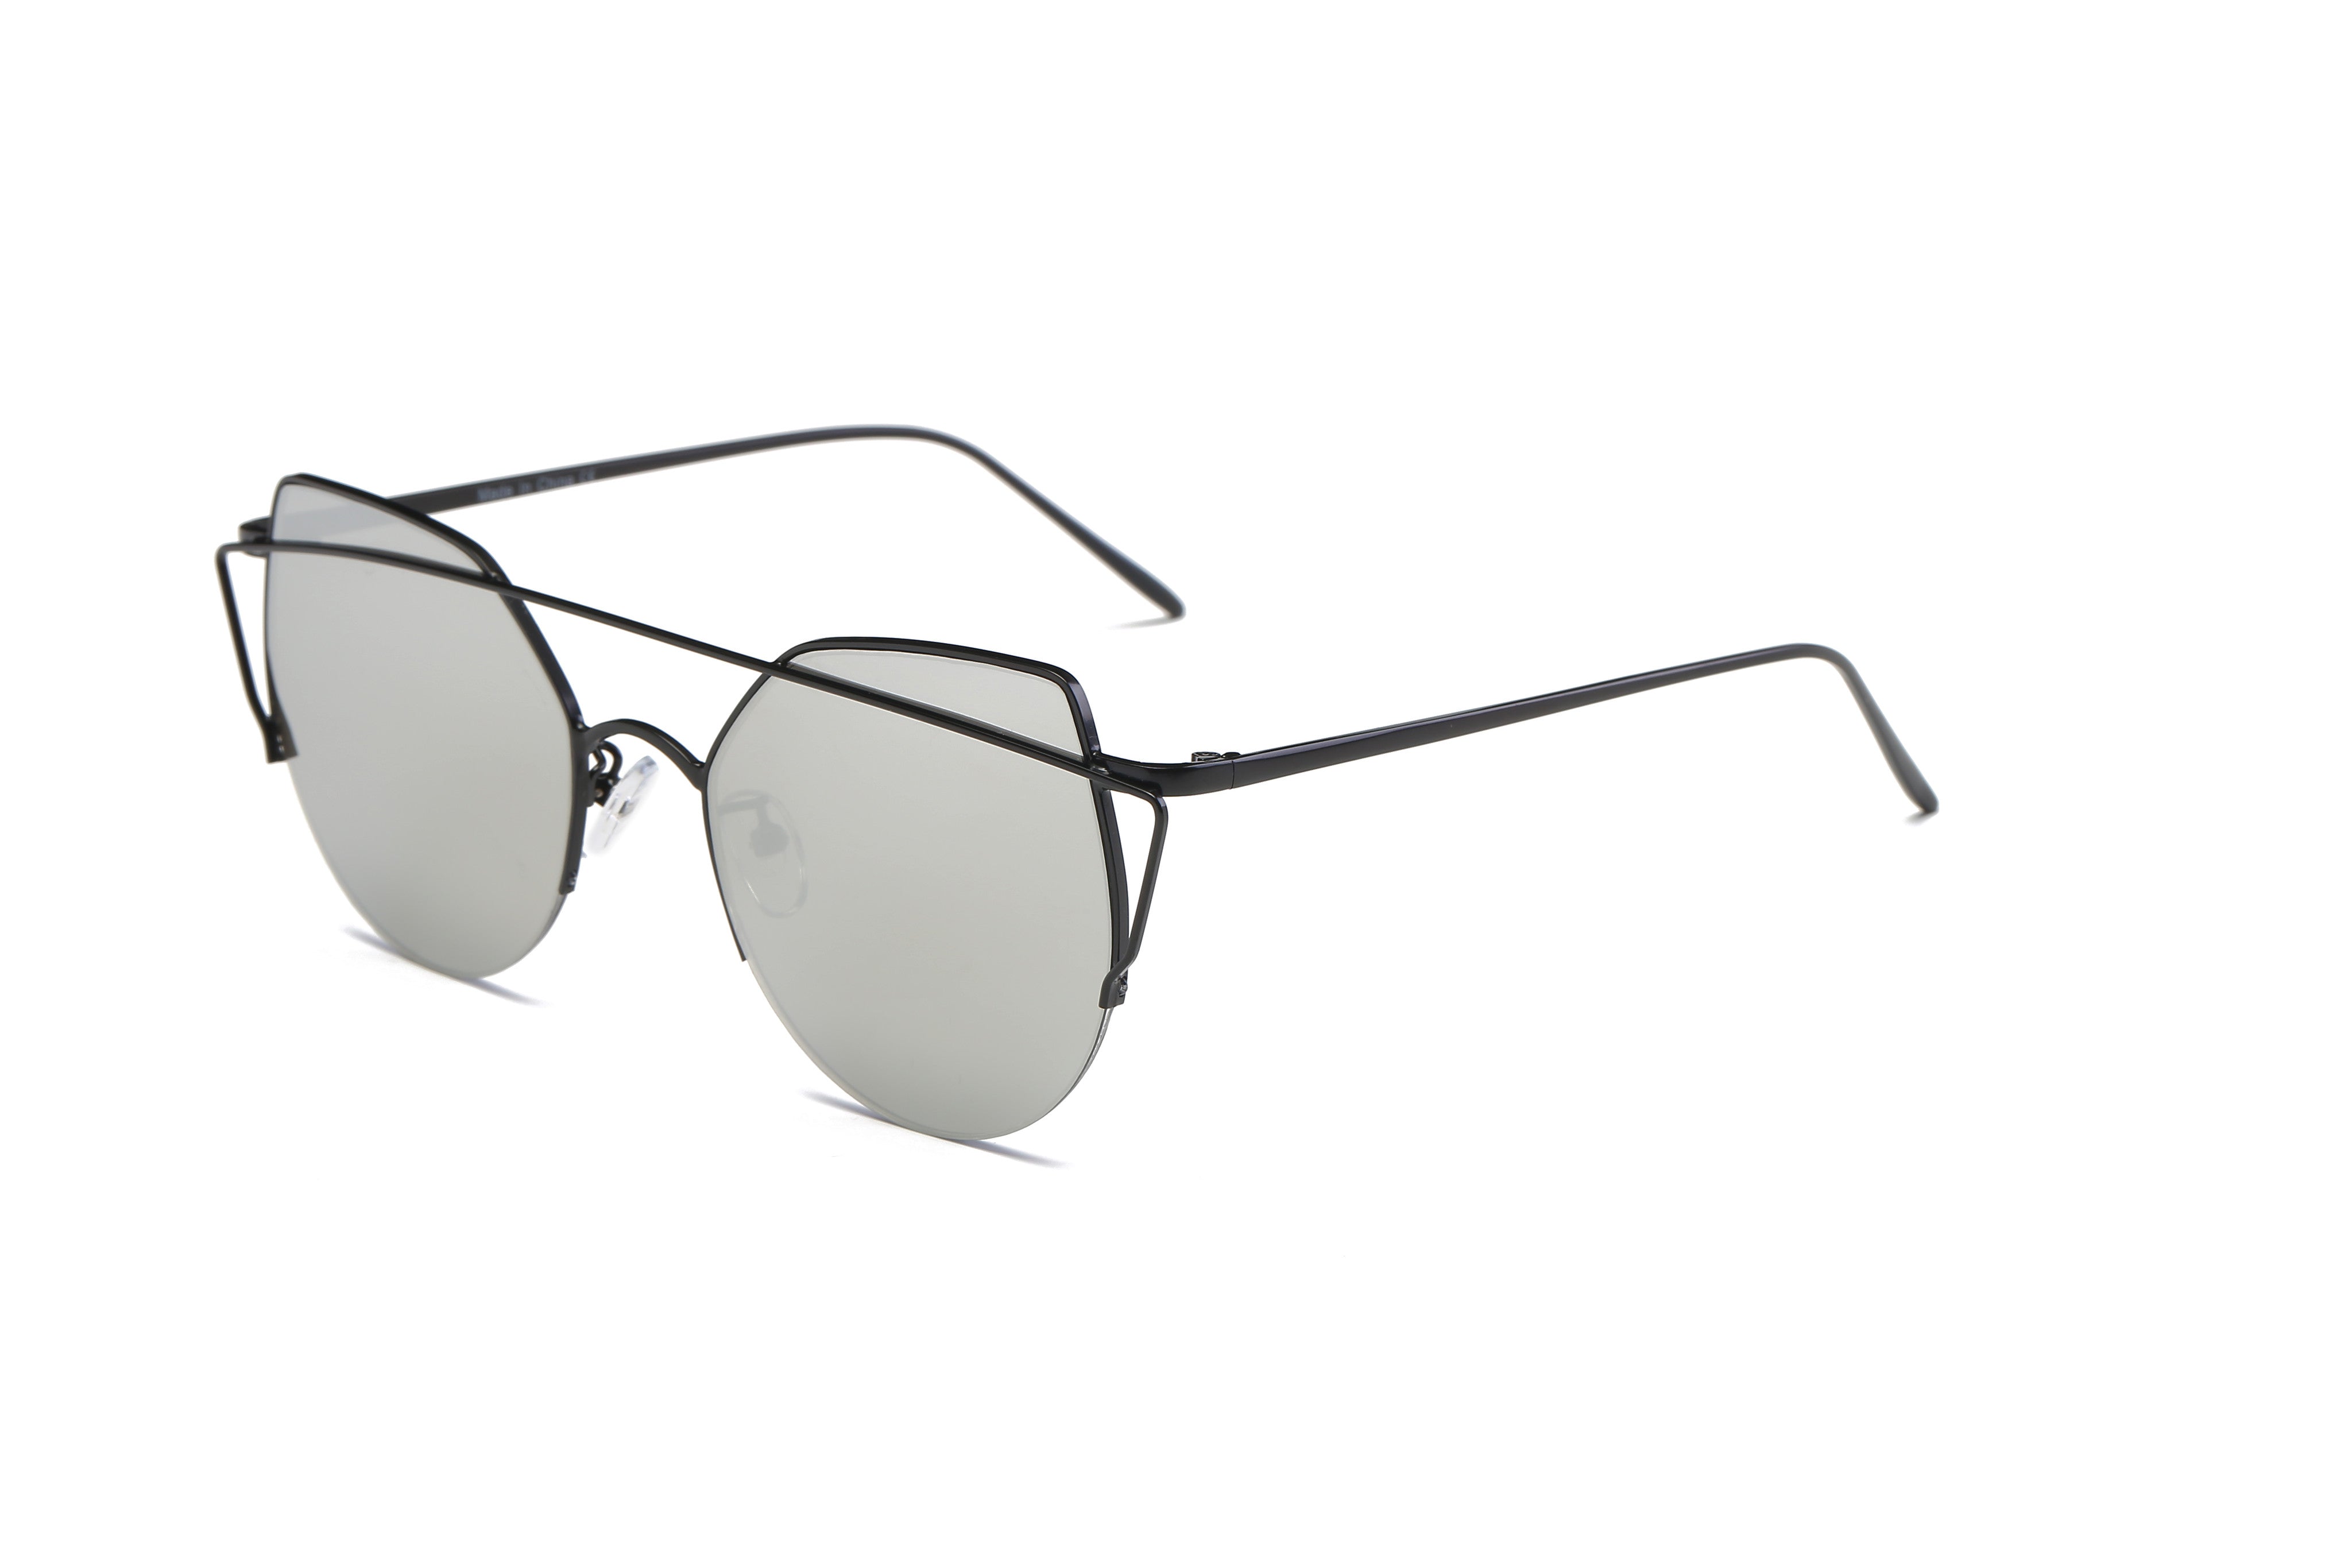 D70 - Women High Pointed Cat Eye Fashion Mirrored Sunglasses Black FRAME - Silver Lens